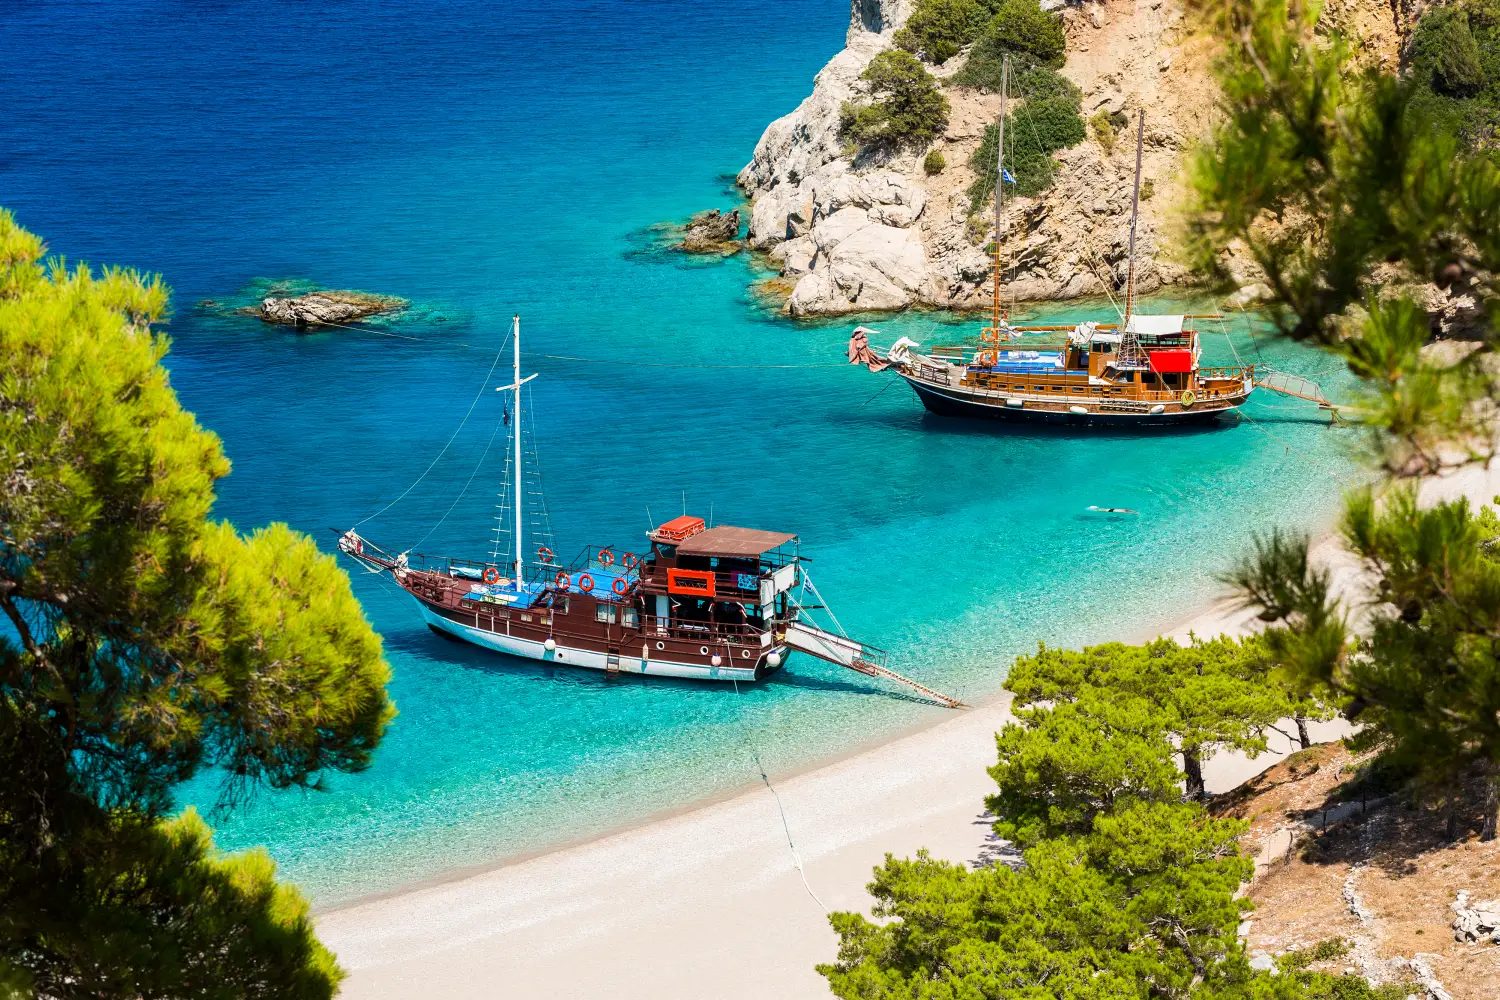 Ferry to Karpathos - Beautiful Apella beach hidden between high mountains in Karpathos island. Greece.